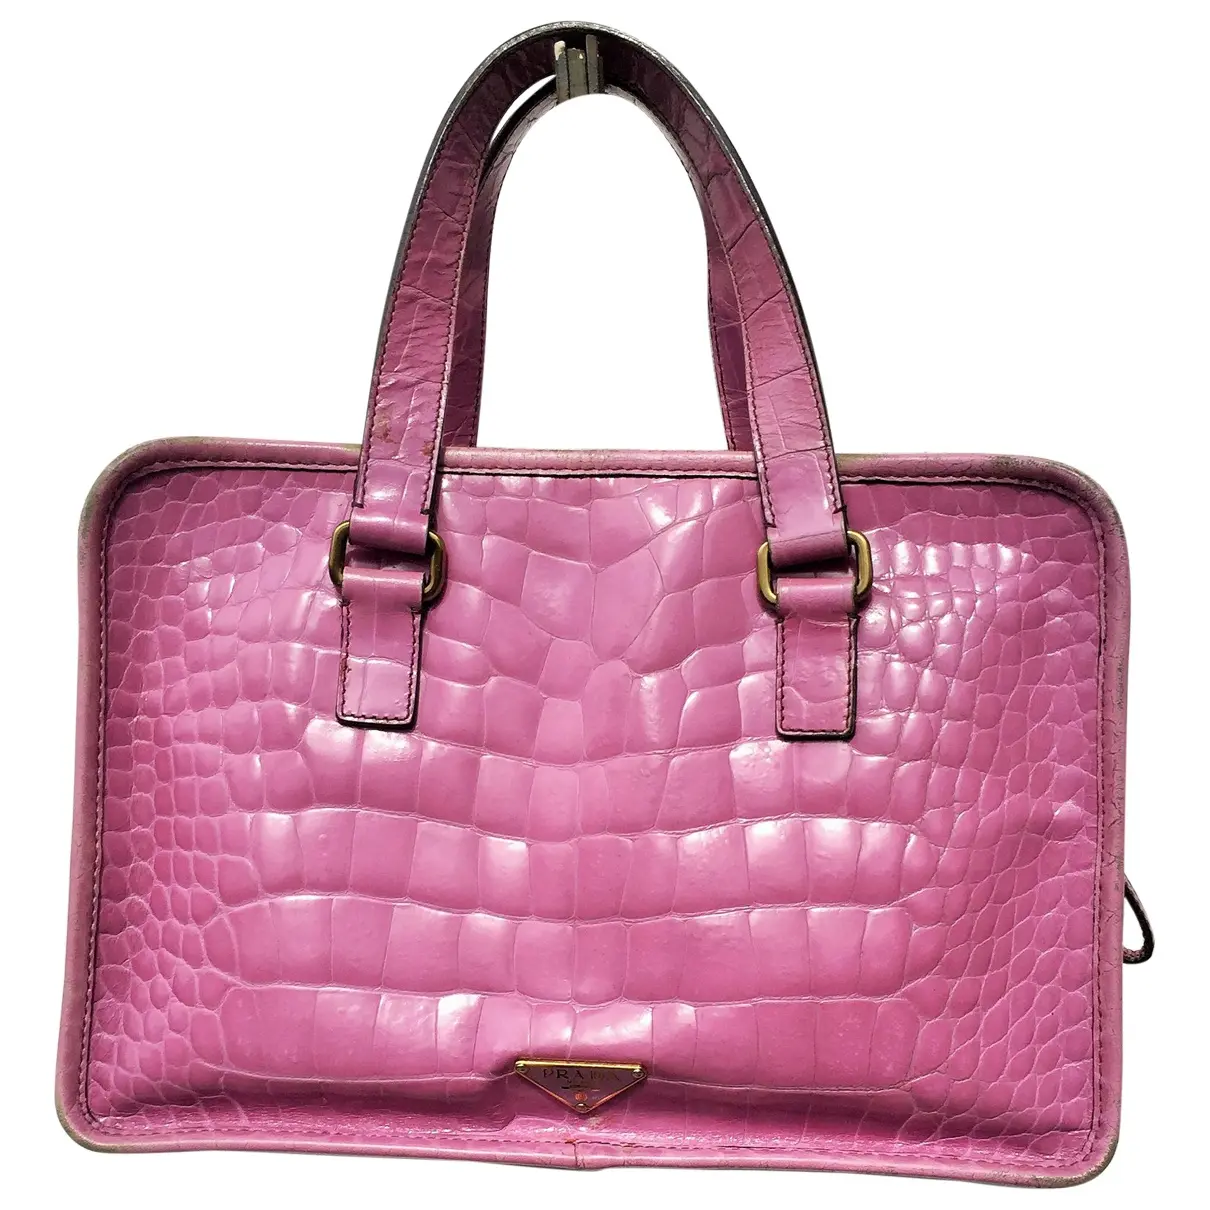 Pink Patent leather Handbag Prada